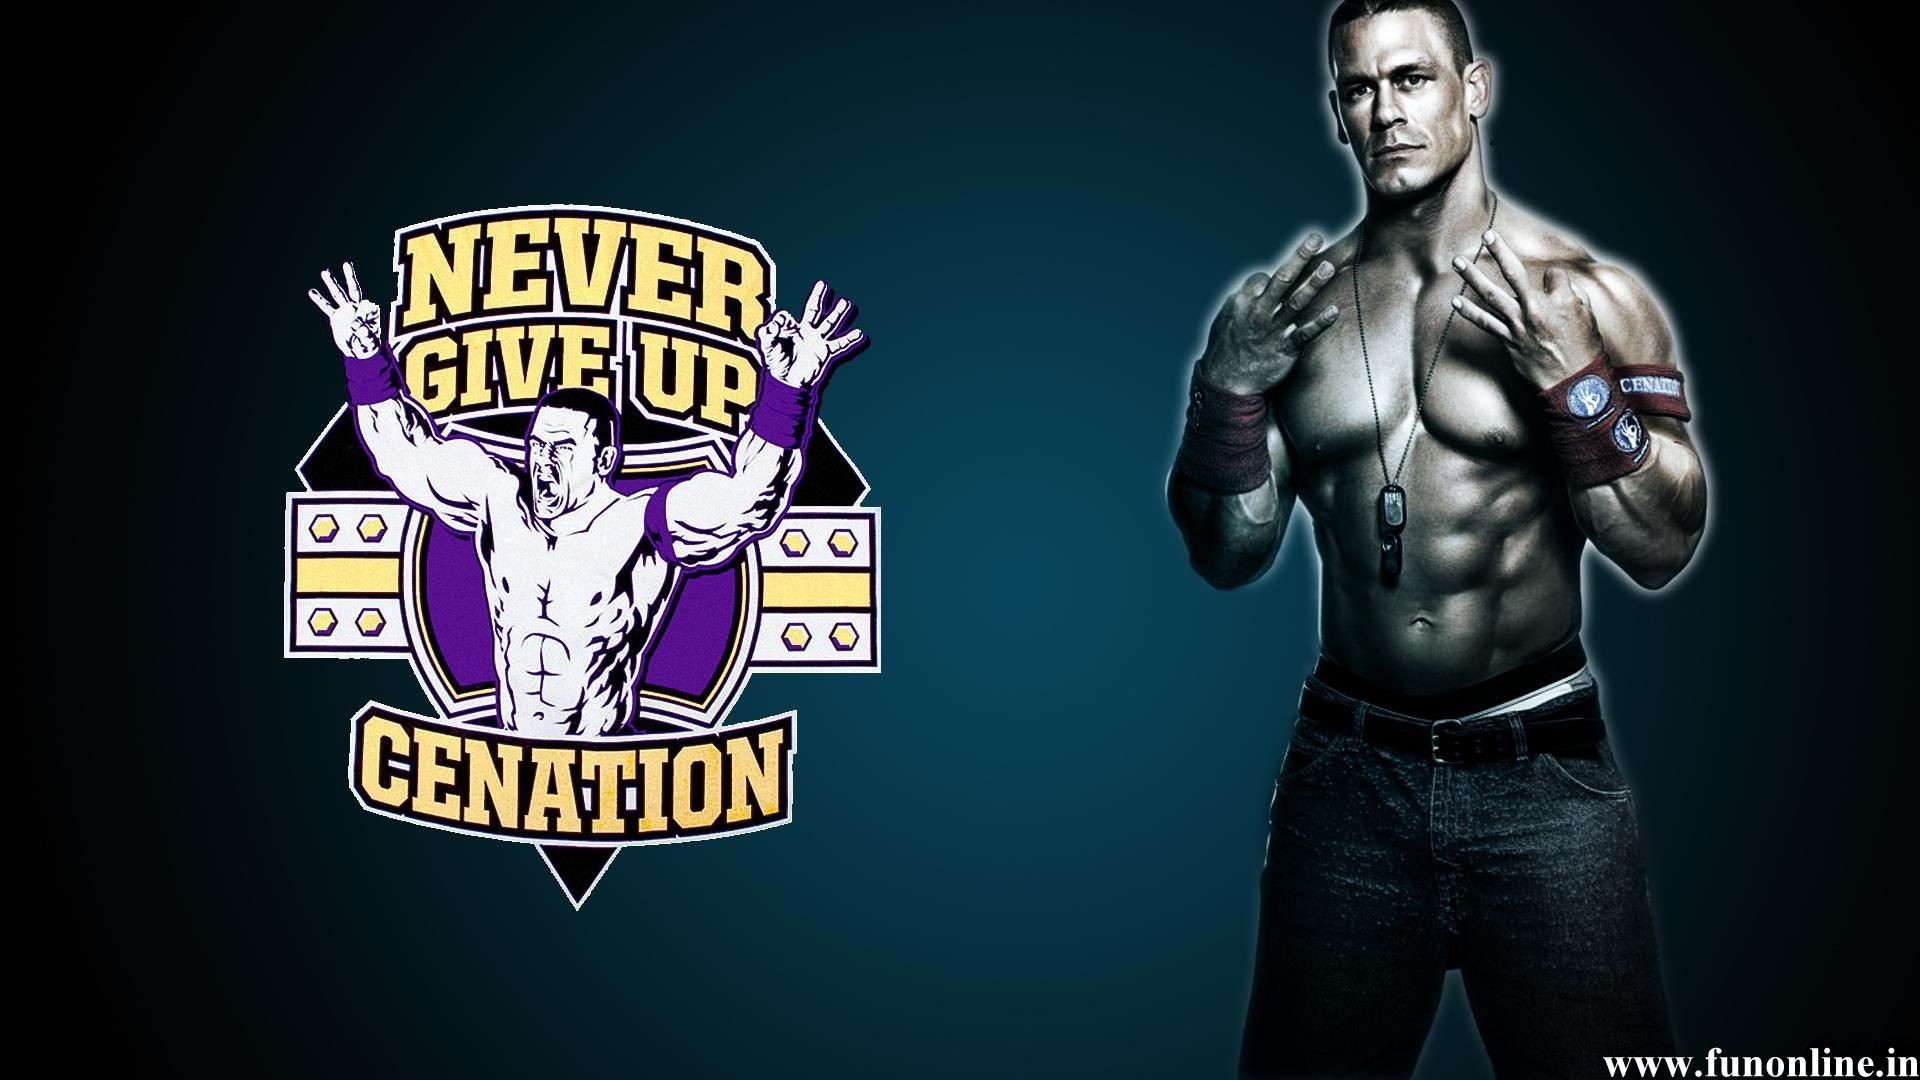 John Cena Wallpapers, Download Wwe John Cena's Hd Wallpaper - John Cena Never Give Up Hd Img , HD Wallpaper & Backgrounds